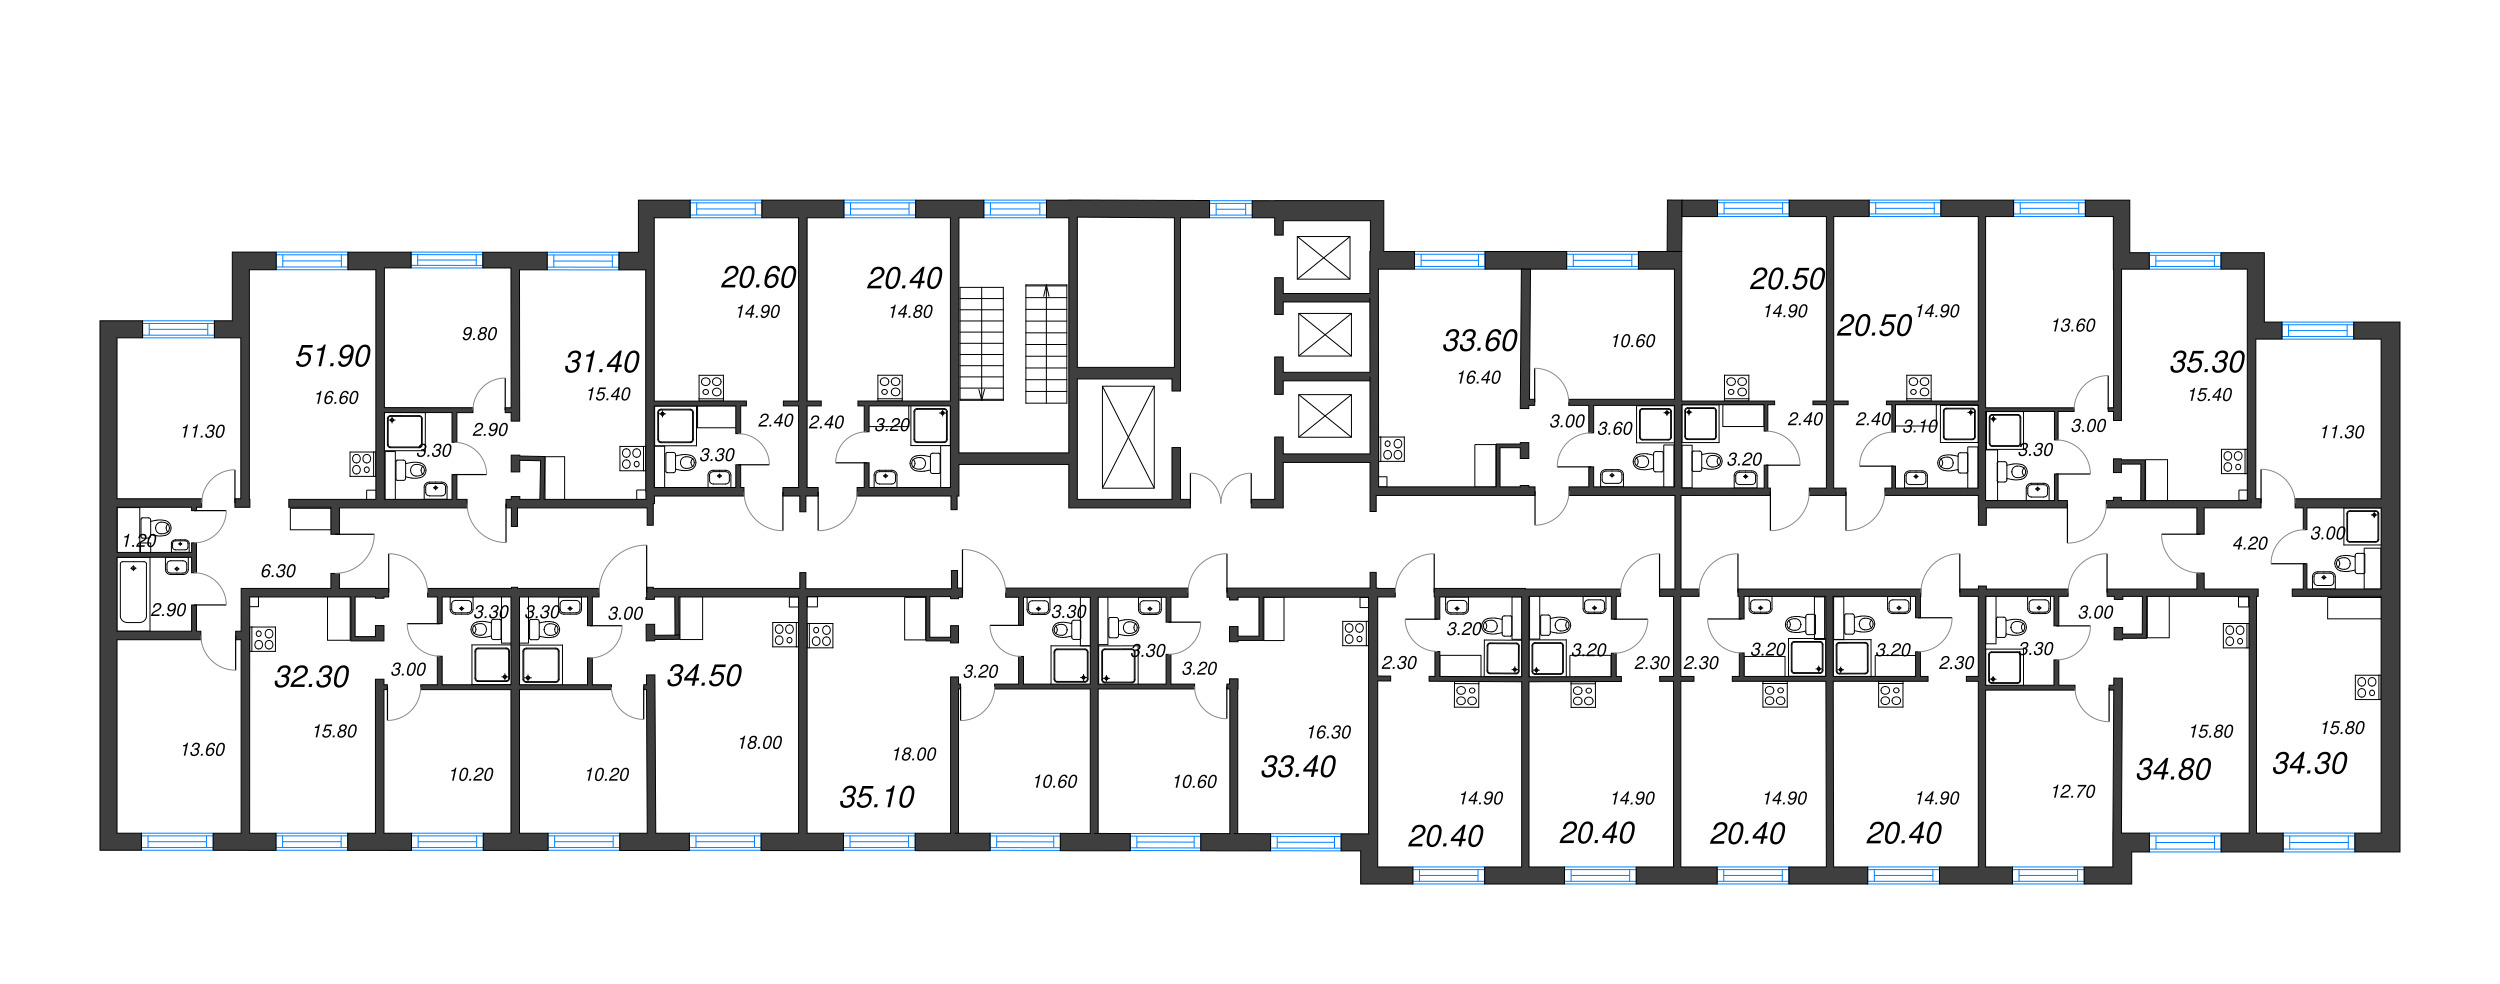 3-комнатная (Евро) квартира, 51.9 м² - планировка этажа